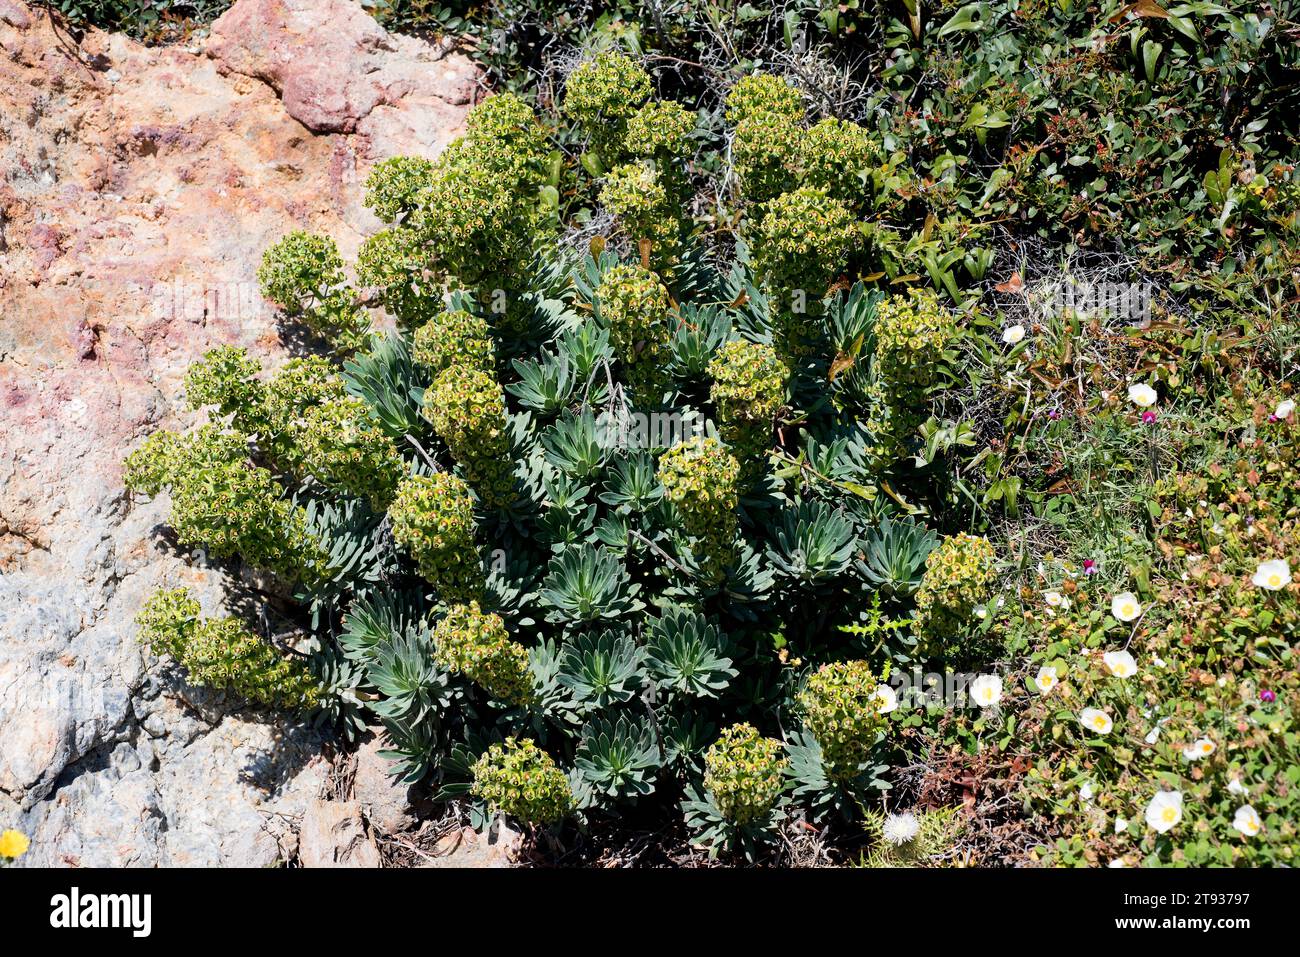 Mediterranean spurge (Euphorbia characias) is a shrub native to Mediterranean Basin. This photo was taken in Cabo Creus Natural Park, Girona province, Stock Photo